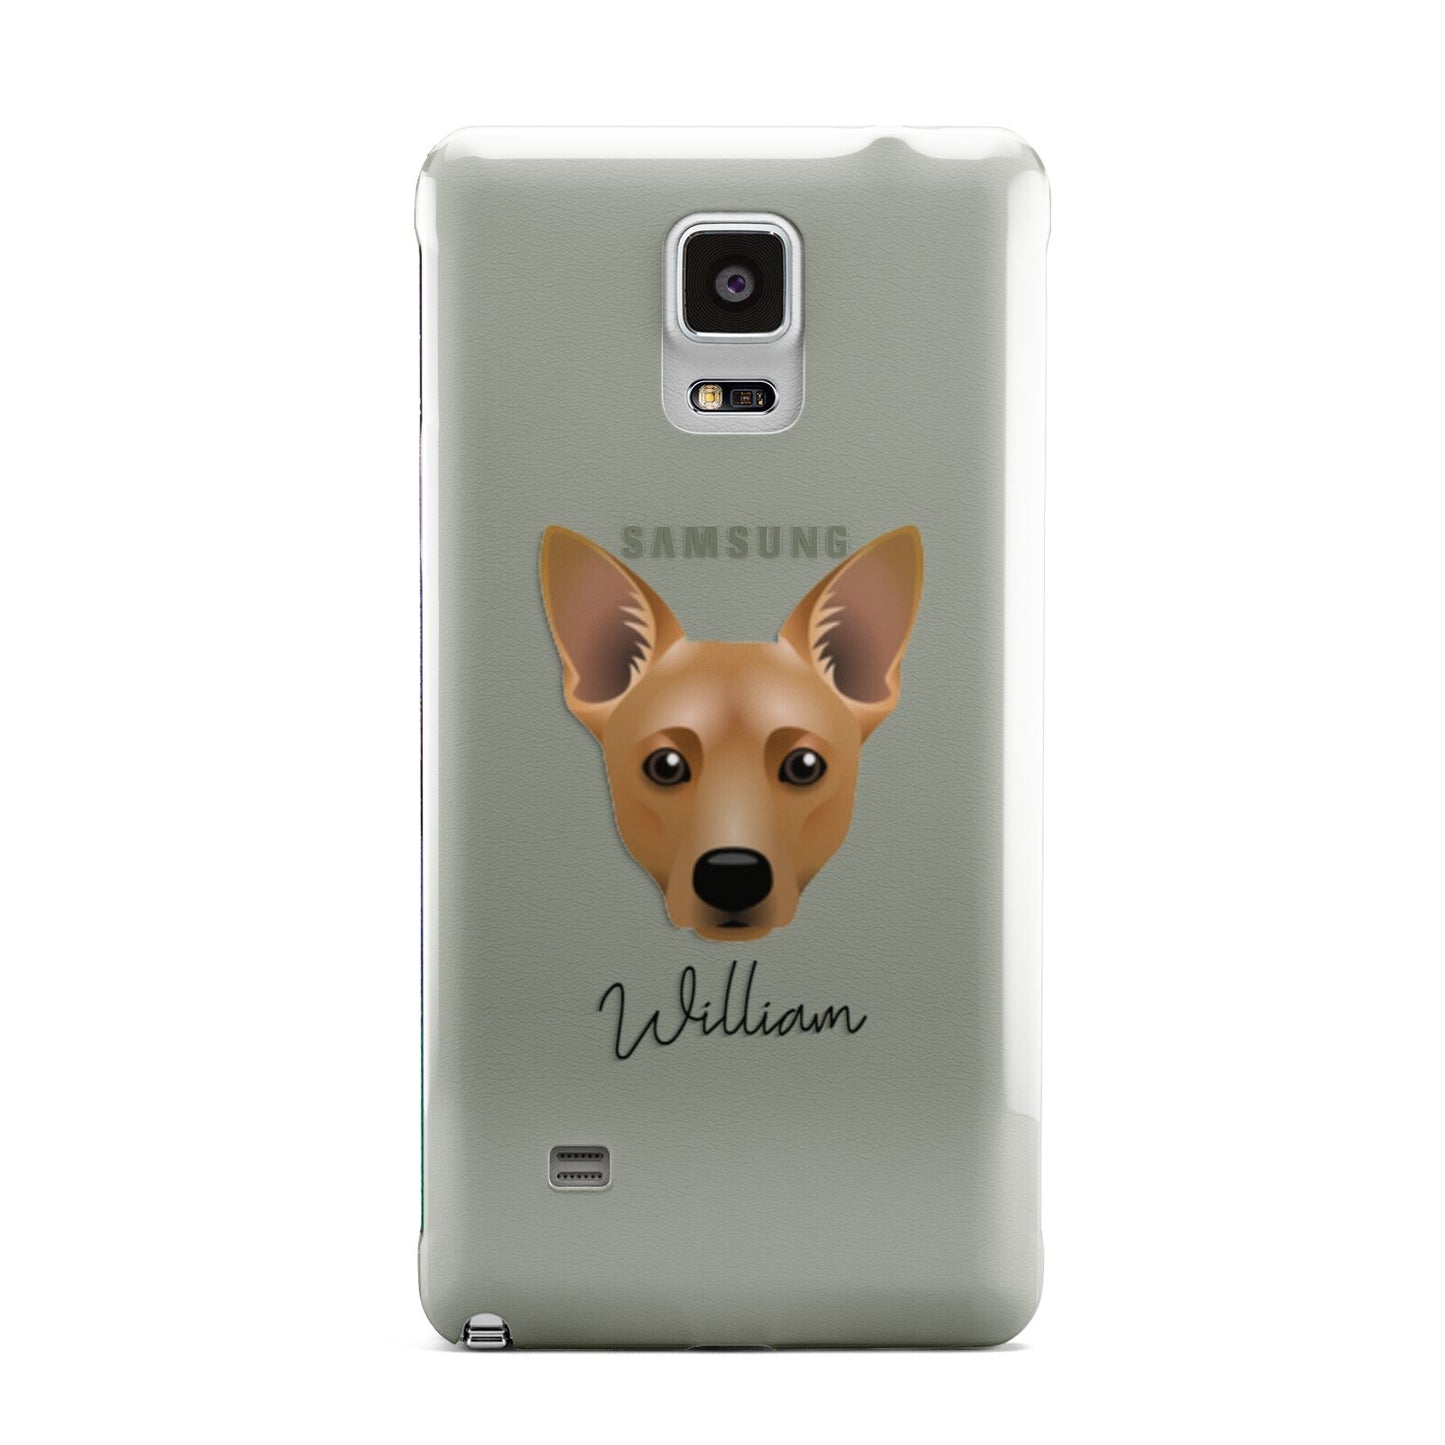 Cojack Personalised Samsung Galaxy Note 4 Case